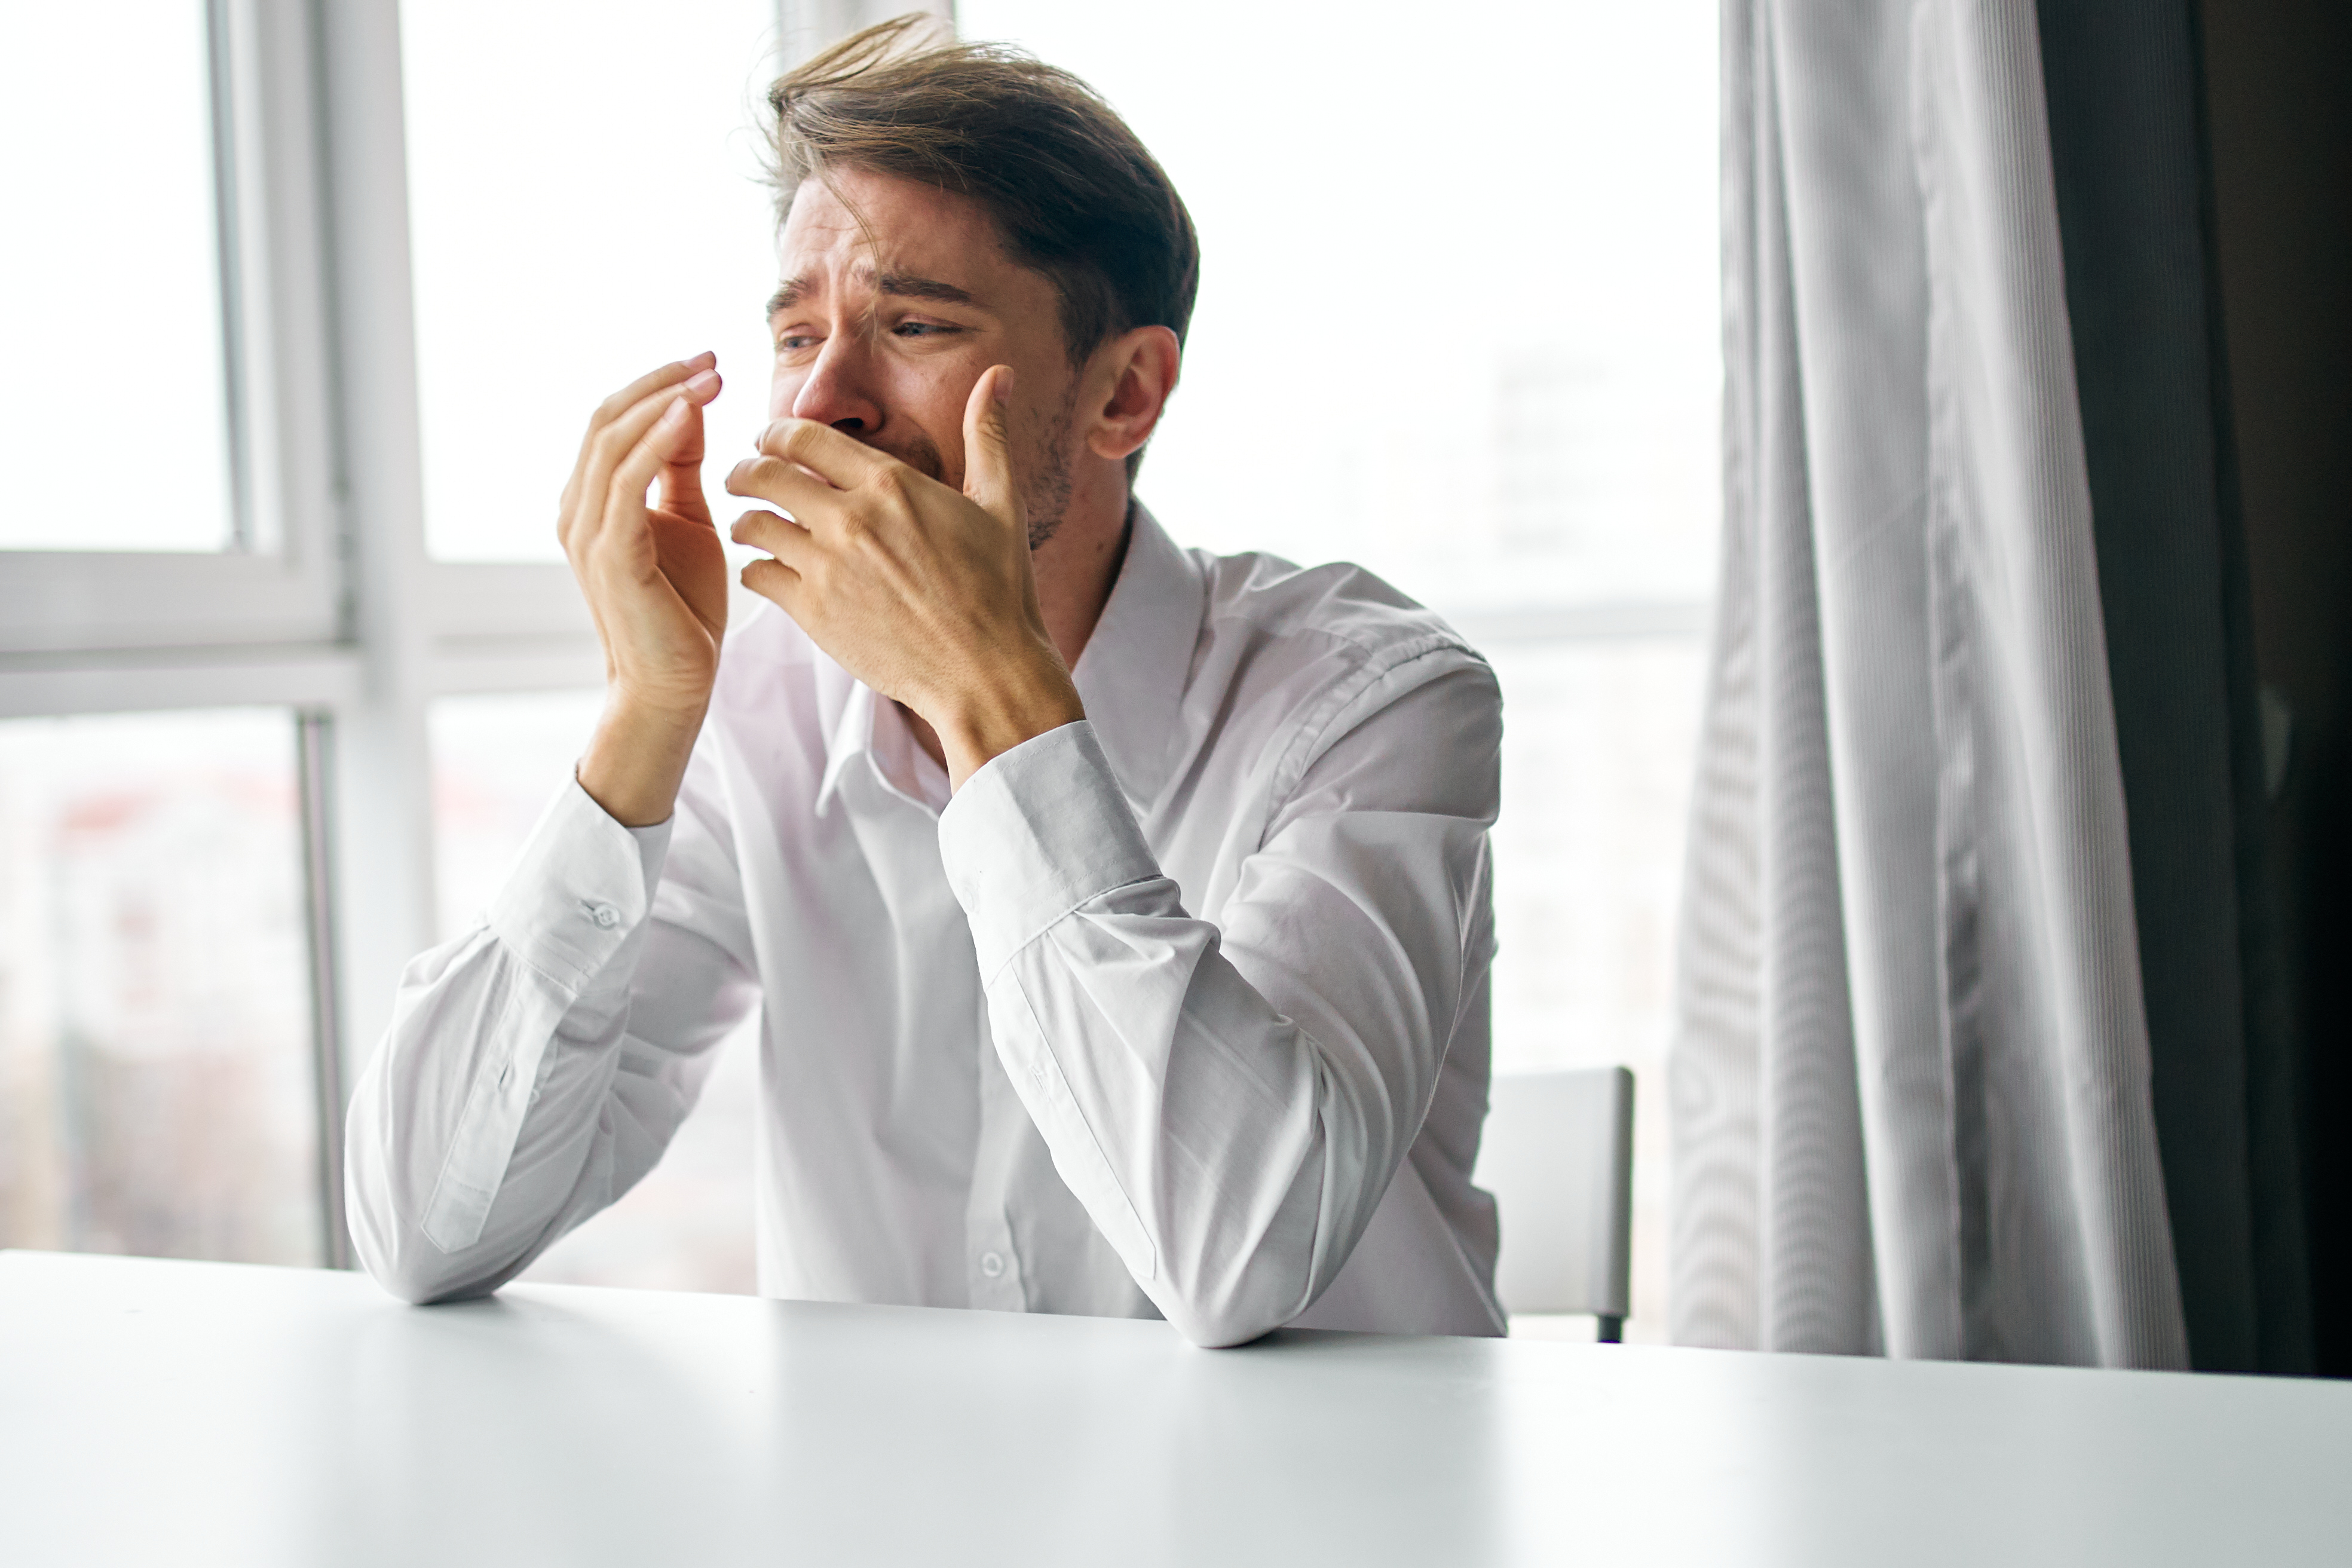 An emotional man crying | Source: Shutterstock